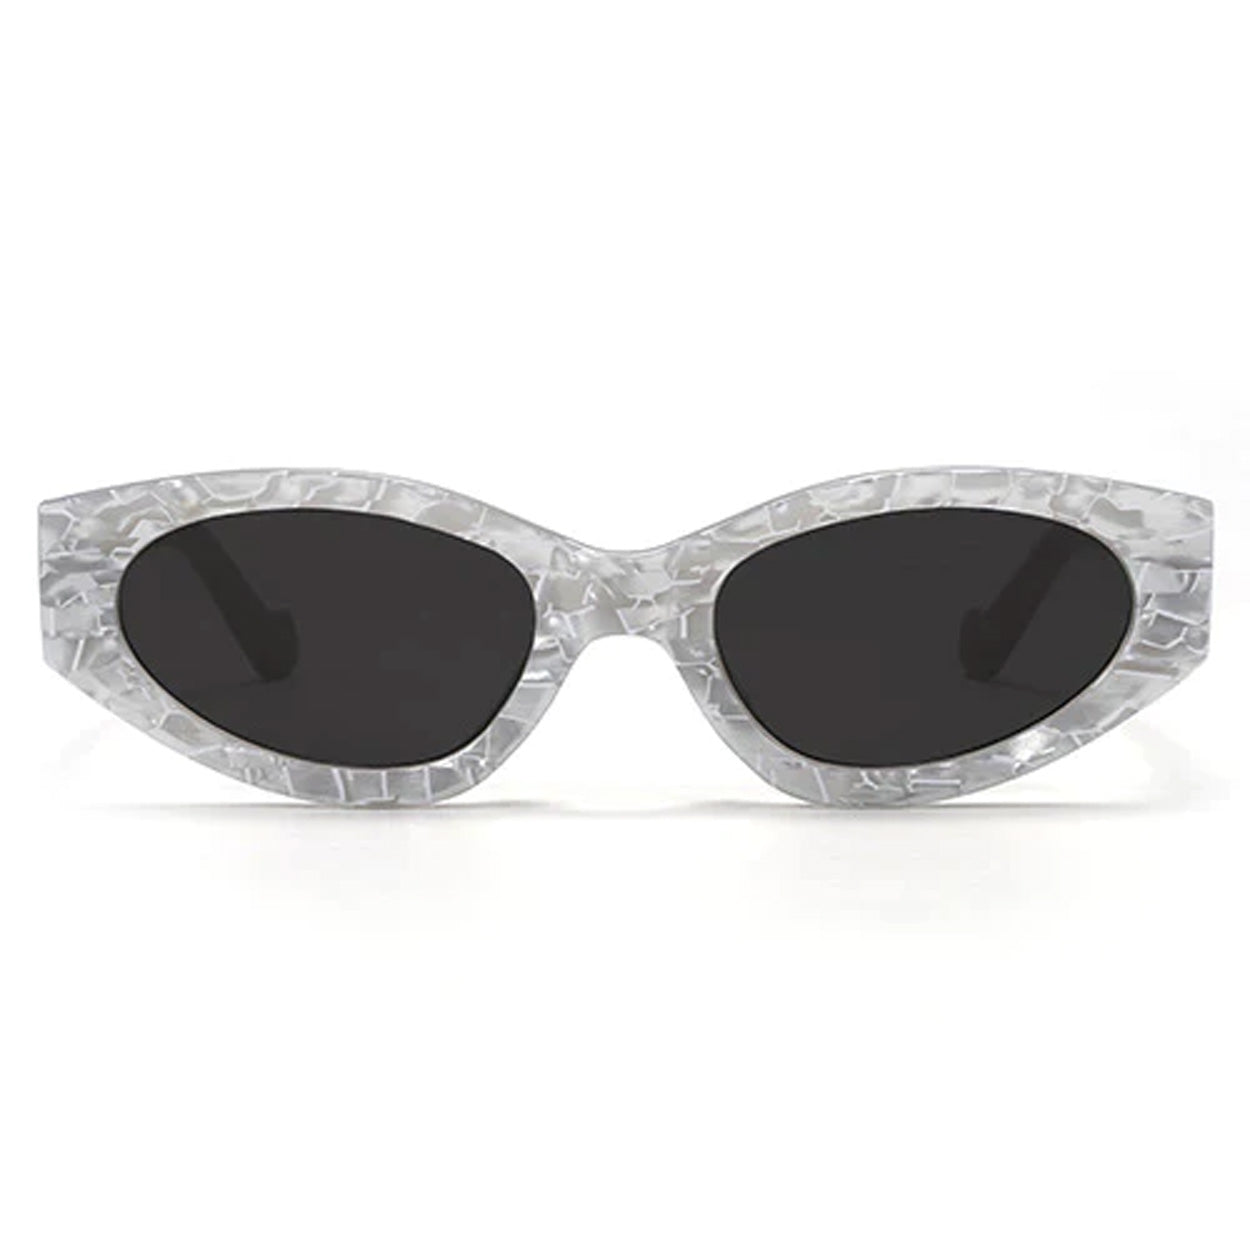 Kat x Money Moves - Black Cateye Sunglasses